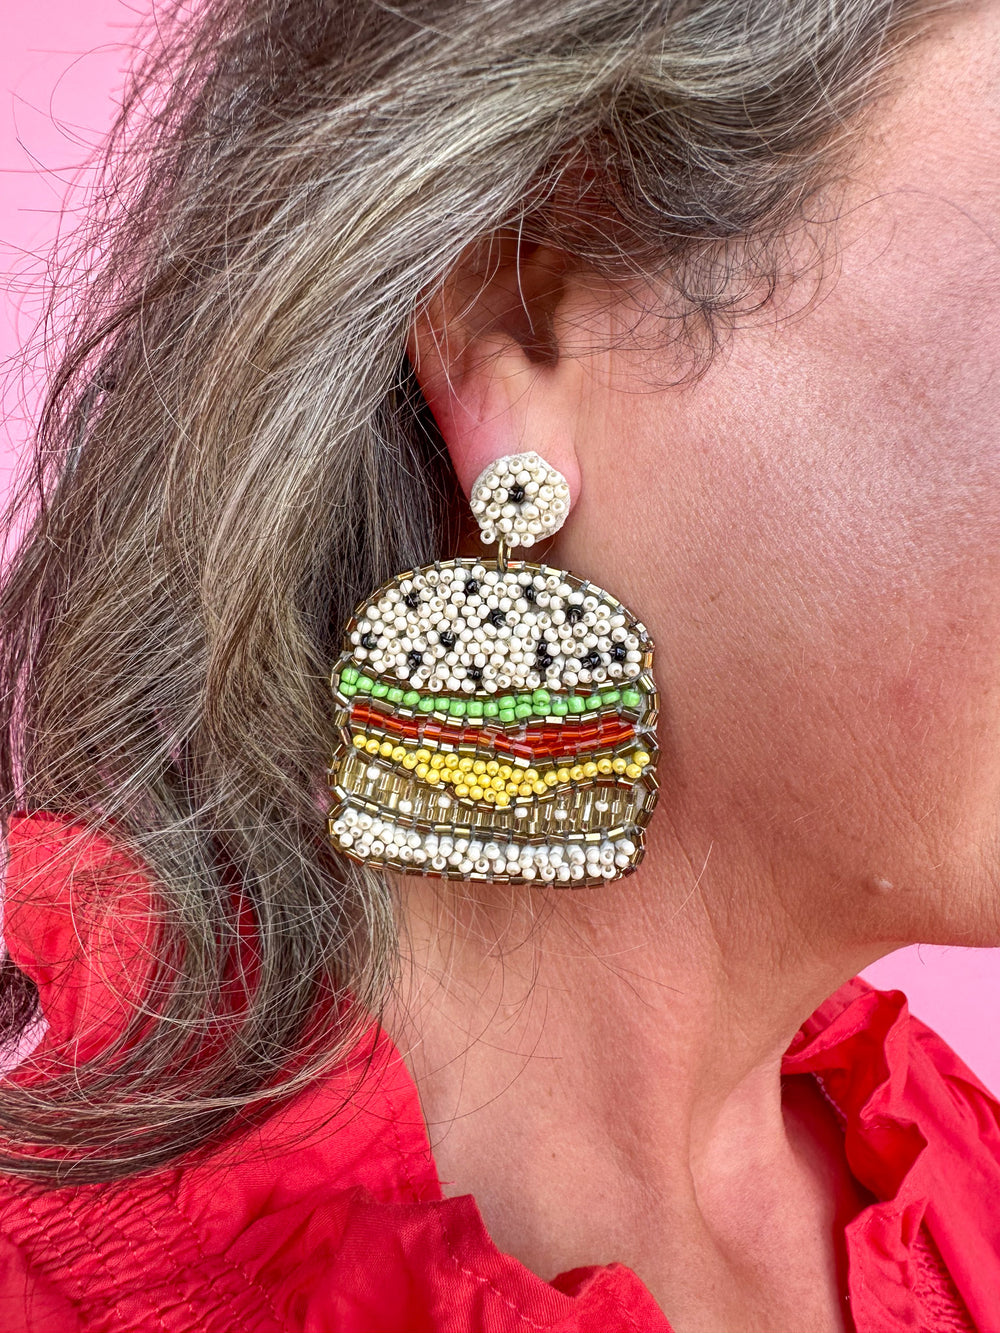 Cheeseburger Earrings